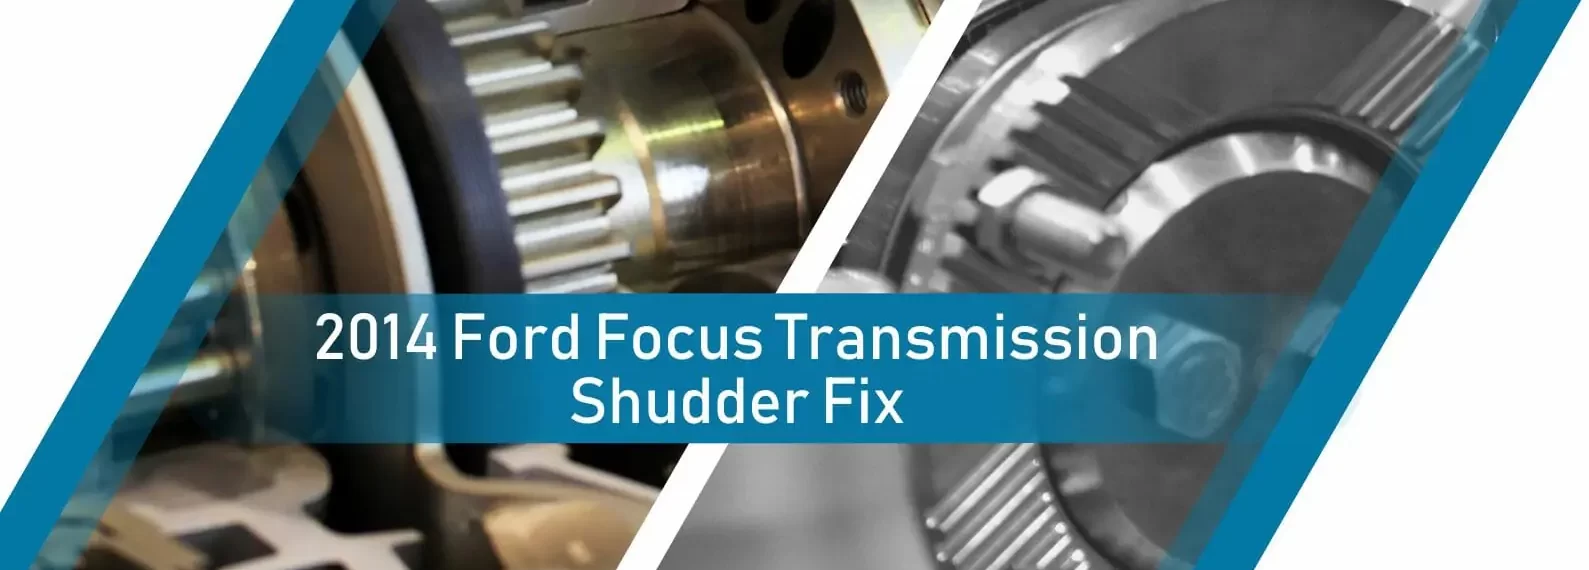 2014 Ford Focus Transmission Shudder Fix: A Complete Guide!